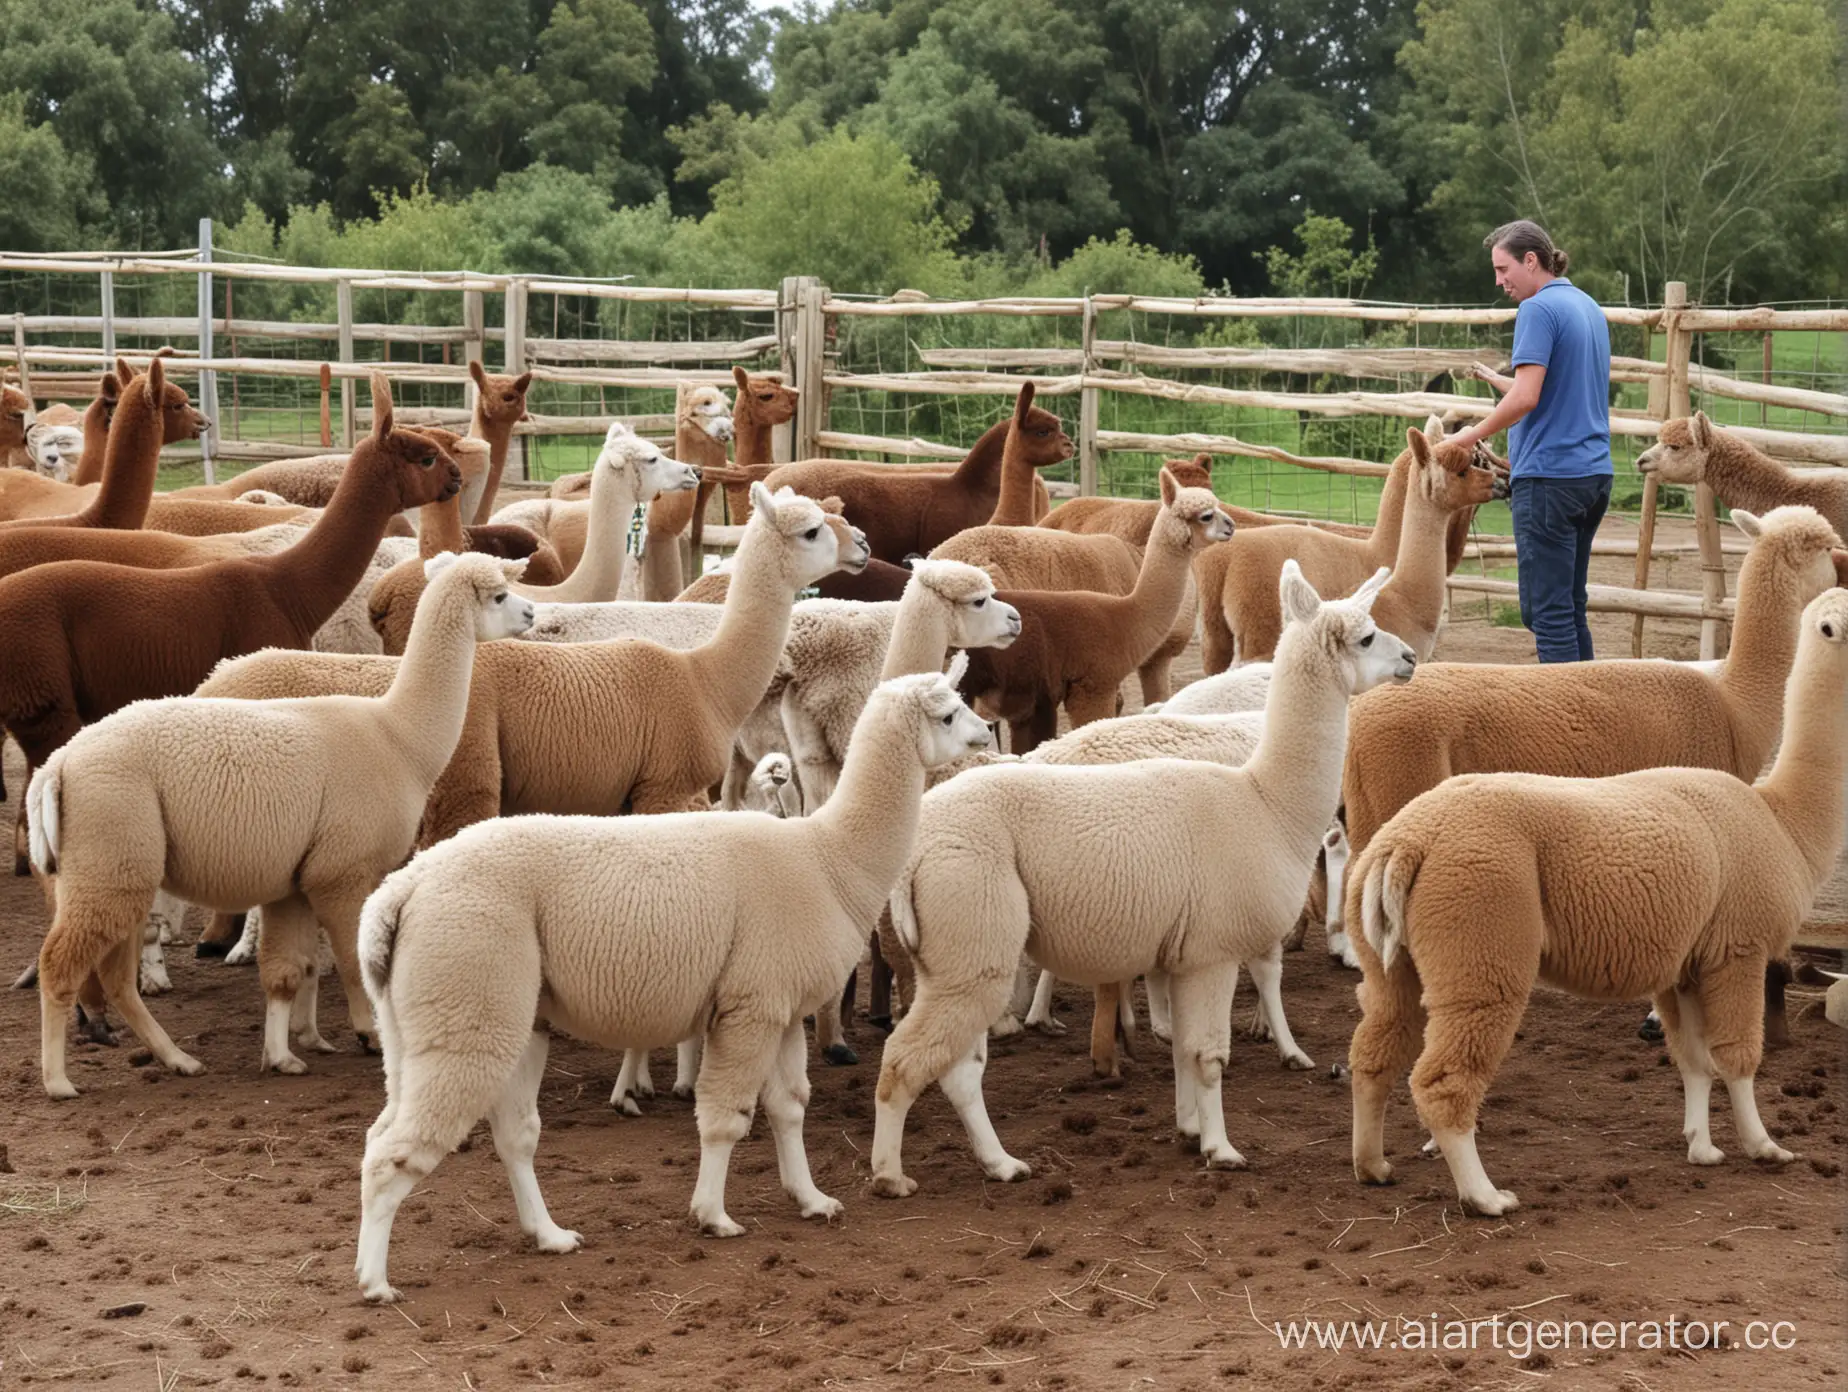 People-Feeding-Alpacas-Joyful-Interaction-with-Alpacas-in-a-Farm-Setting